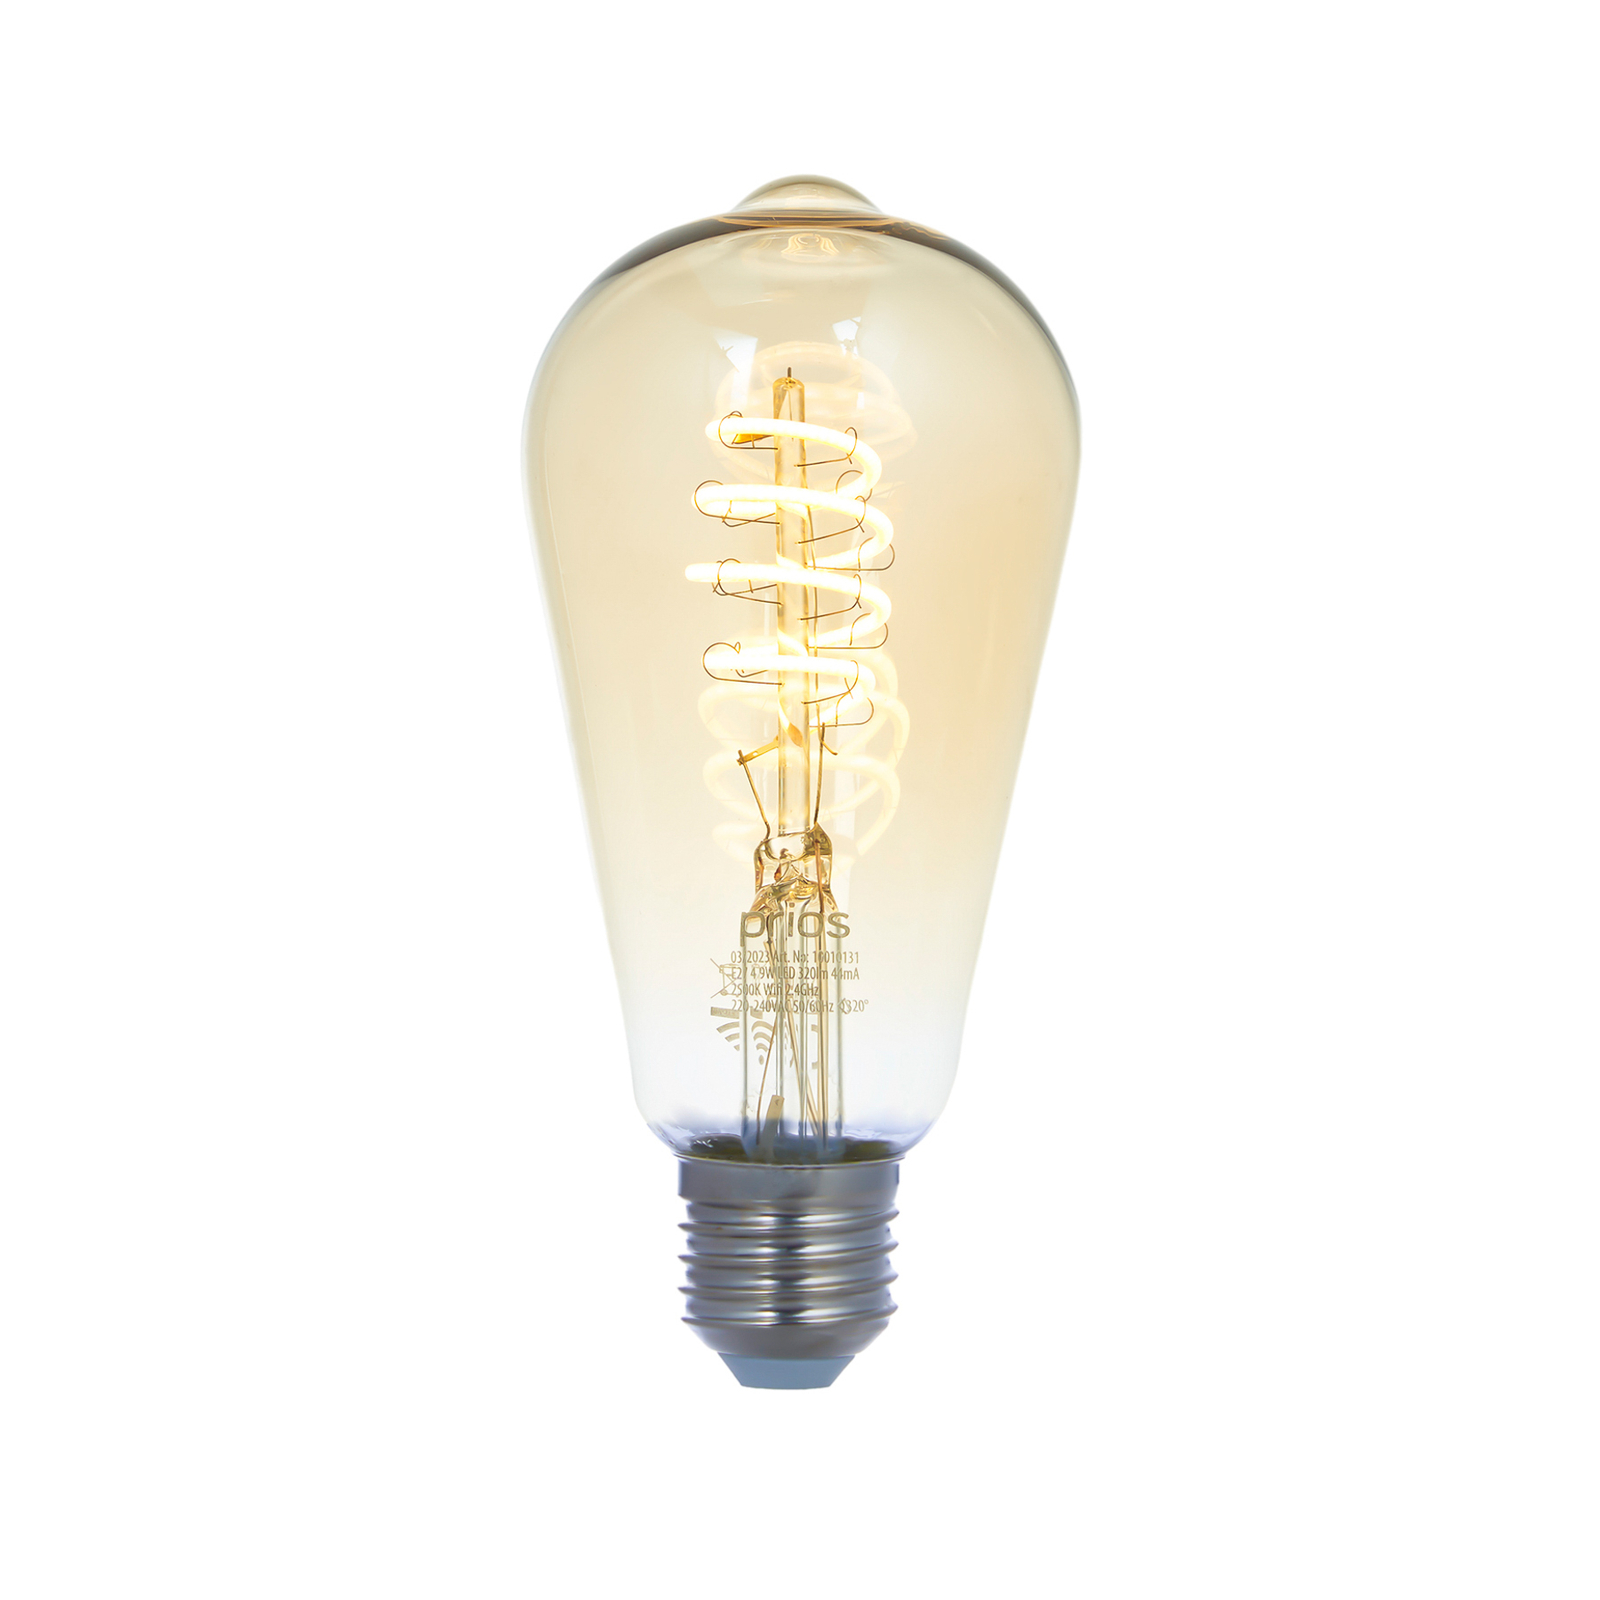 Prios LED-Lampe E27 ST64 4,9W WLAN amber klar, 2er